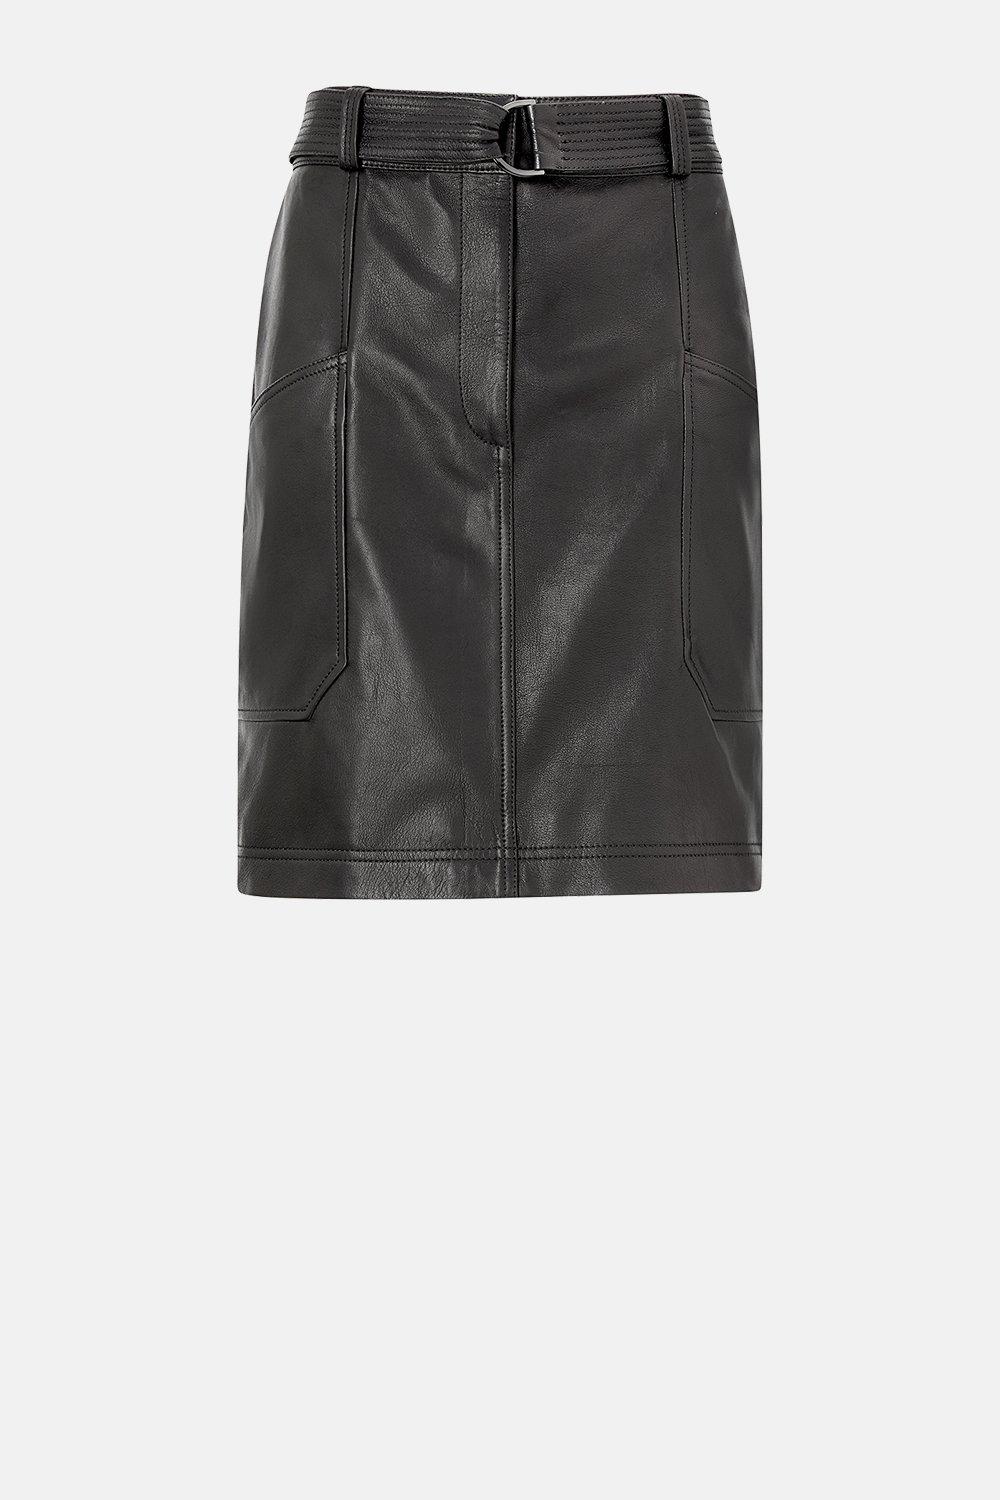 karen millen leather mini skirt